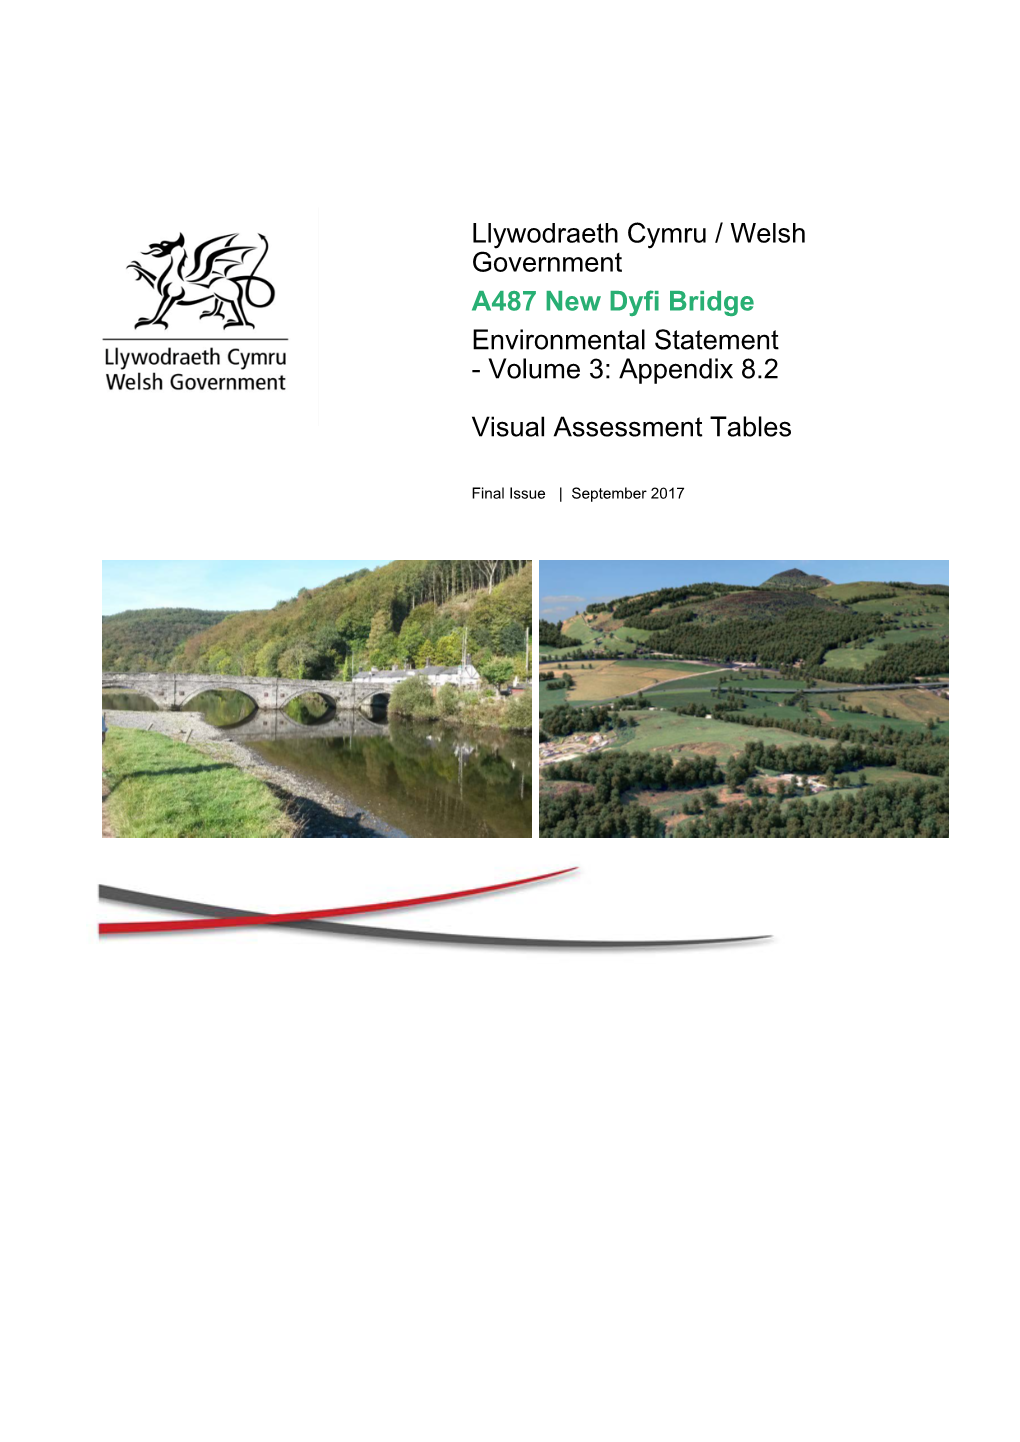 Llywodraeth Cymru / Welsh Government A487 New Dyfi Bridge Environmental Statement - Volume 3: Appendix 8.2